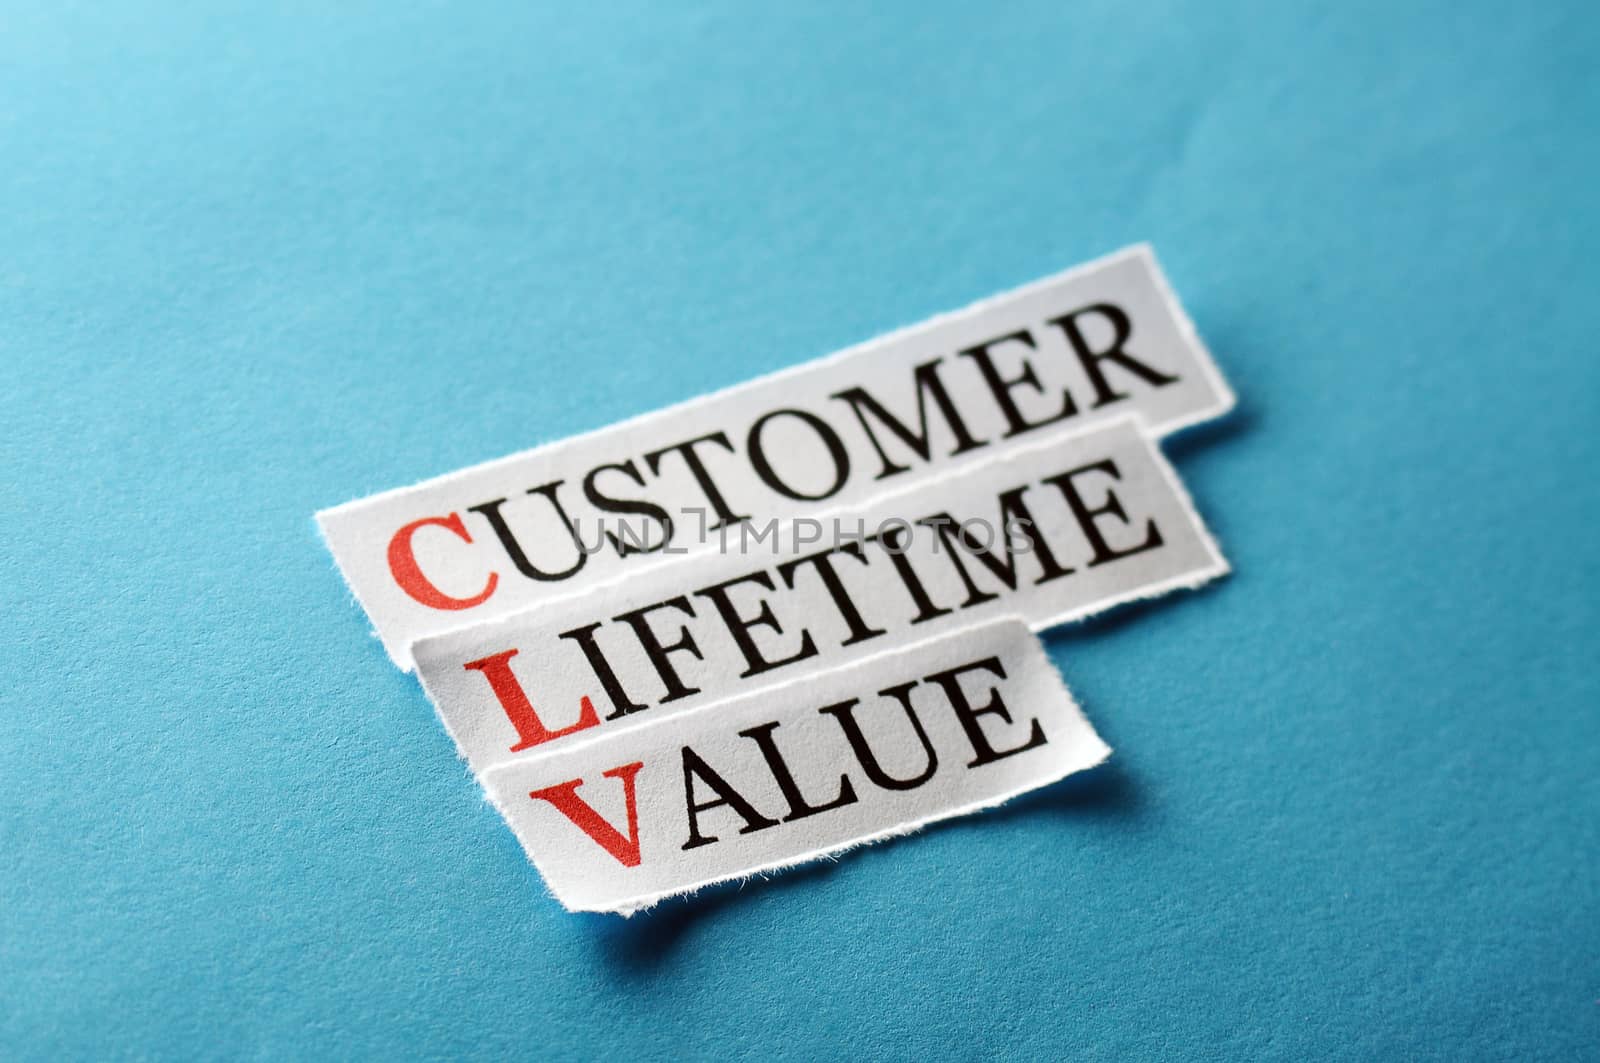 CLV customer lifetime value, words on cut paper hard light